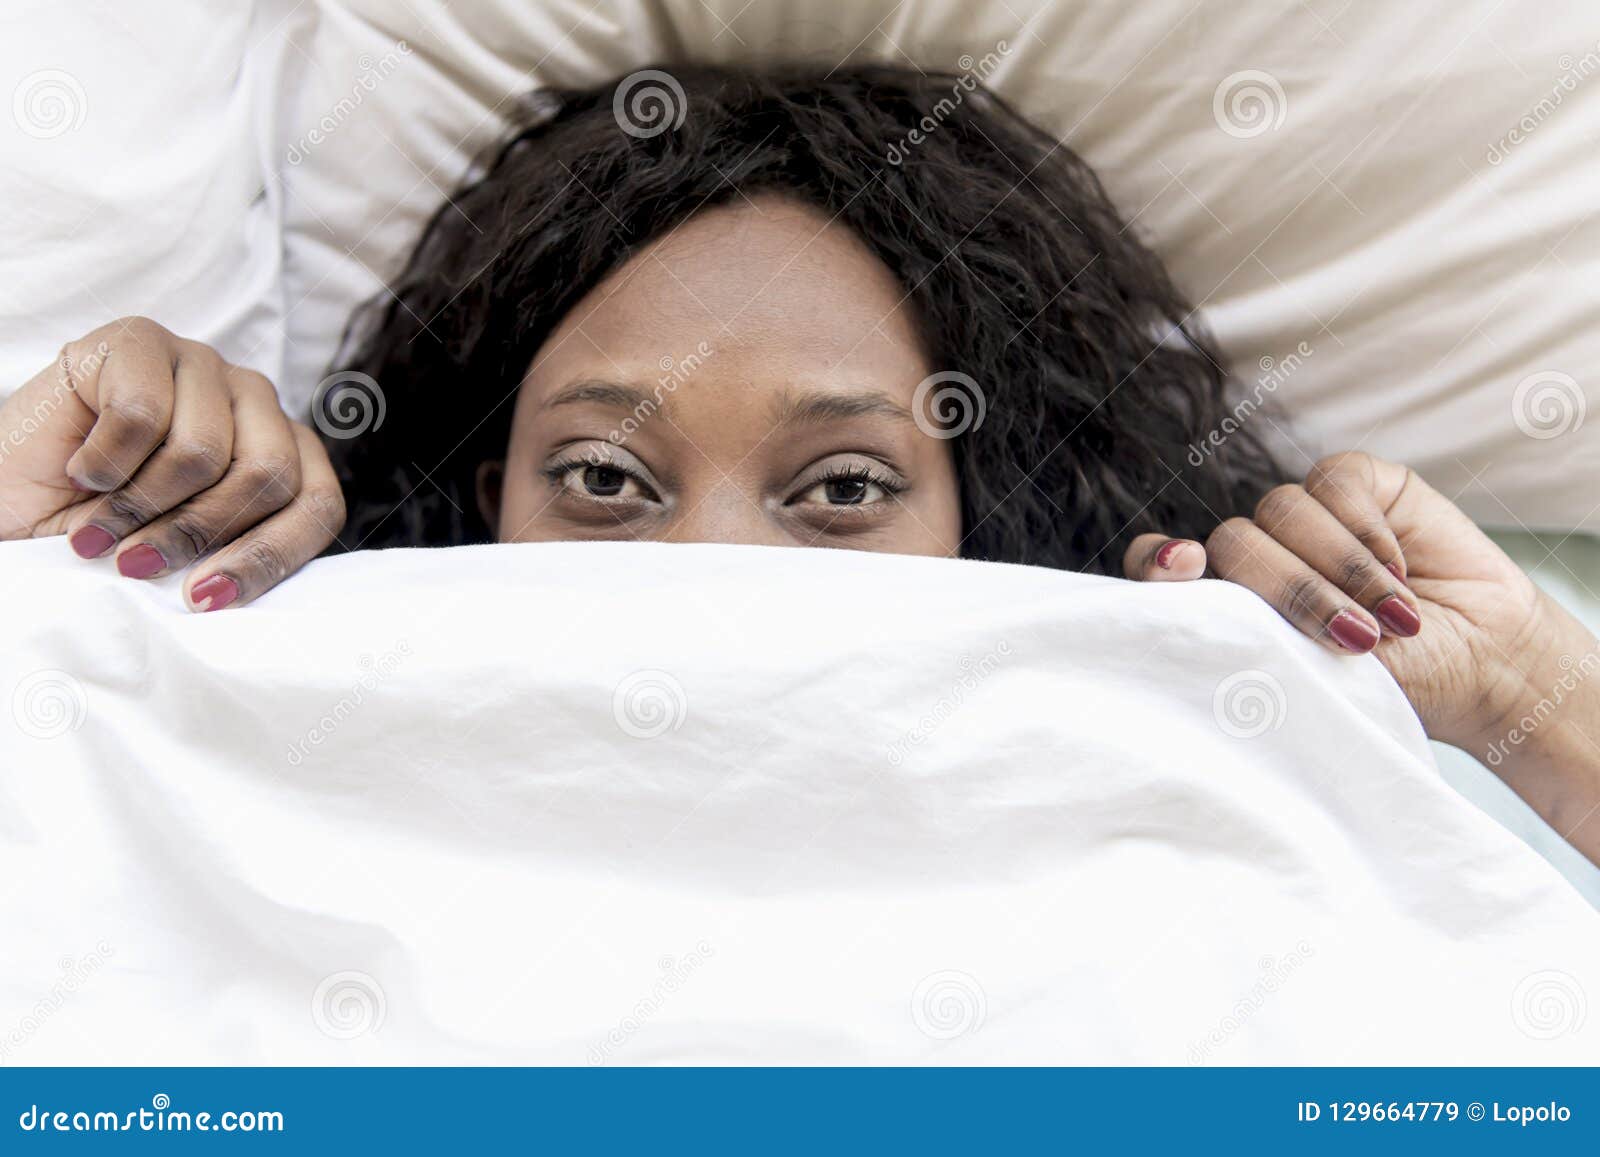 A Afraid Black Woman Under Bed Blanket Stock Image Image Of